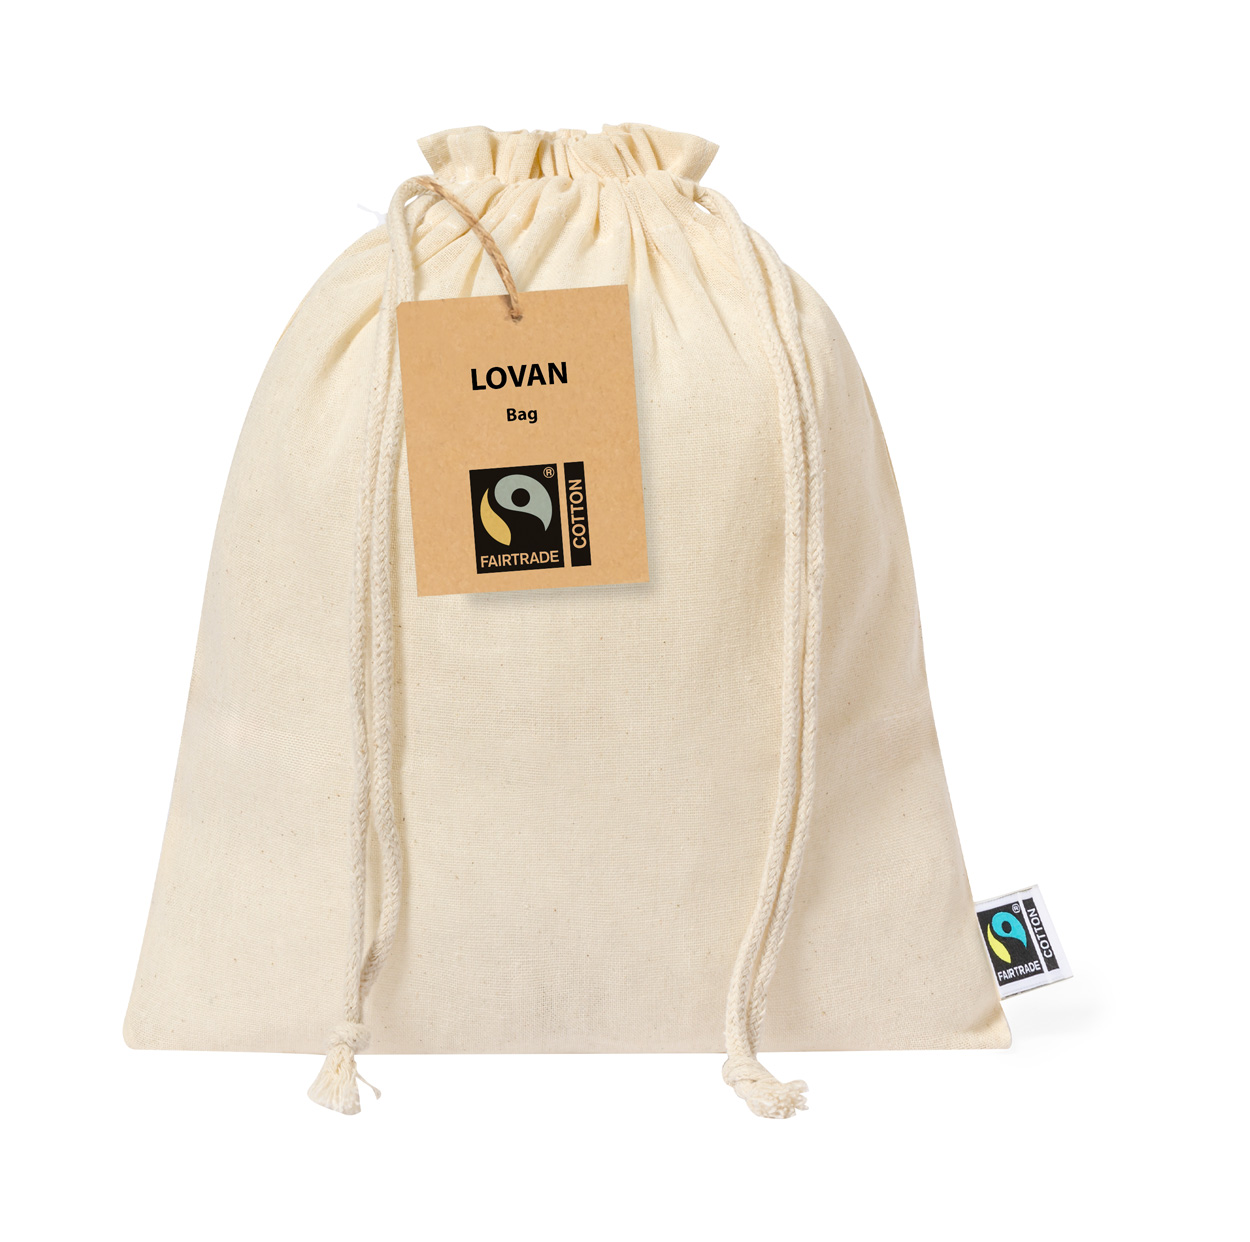 Lovan Fairtrade Fairtrade bag - beige